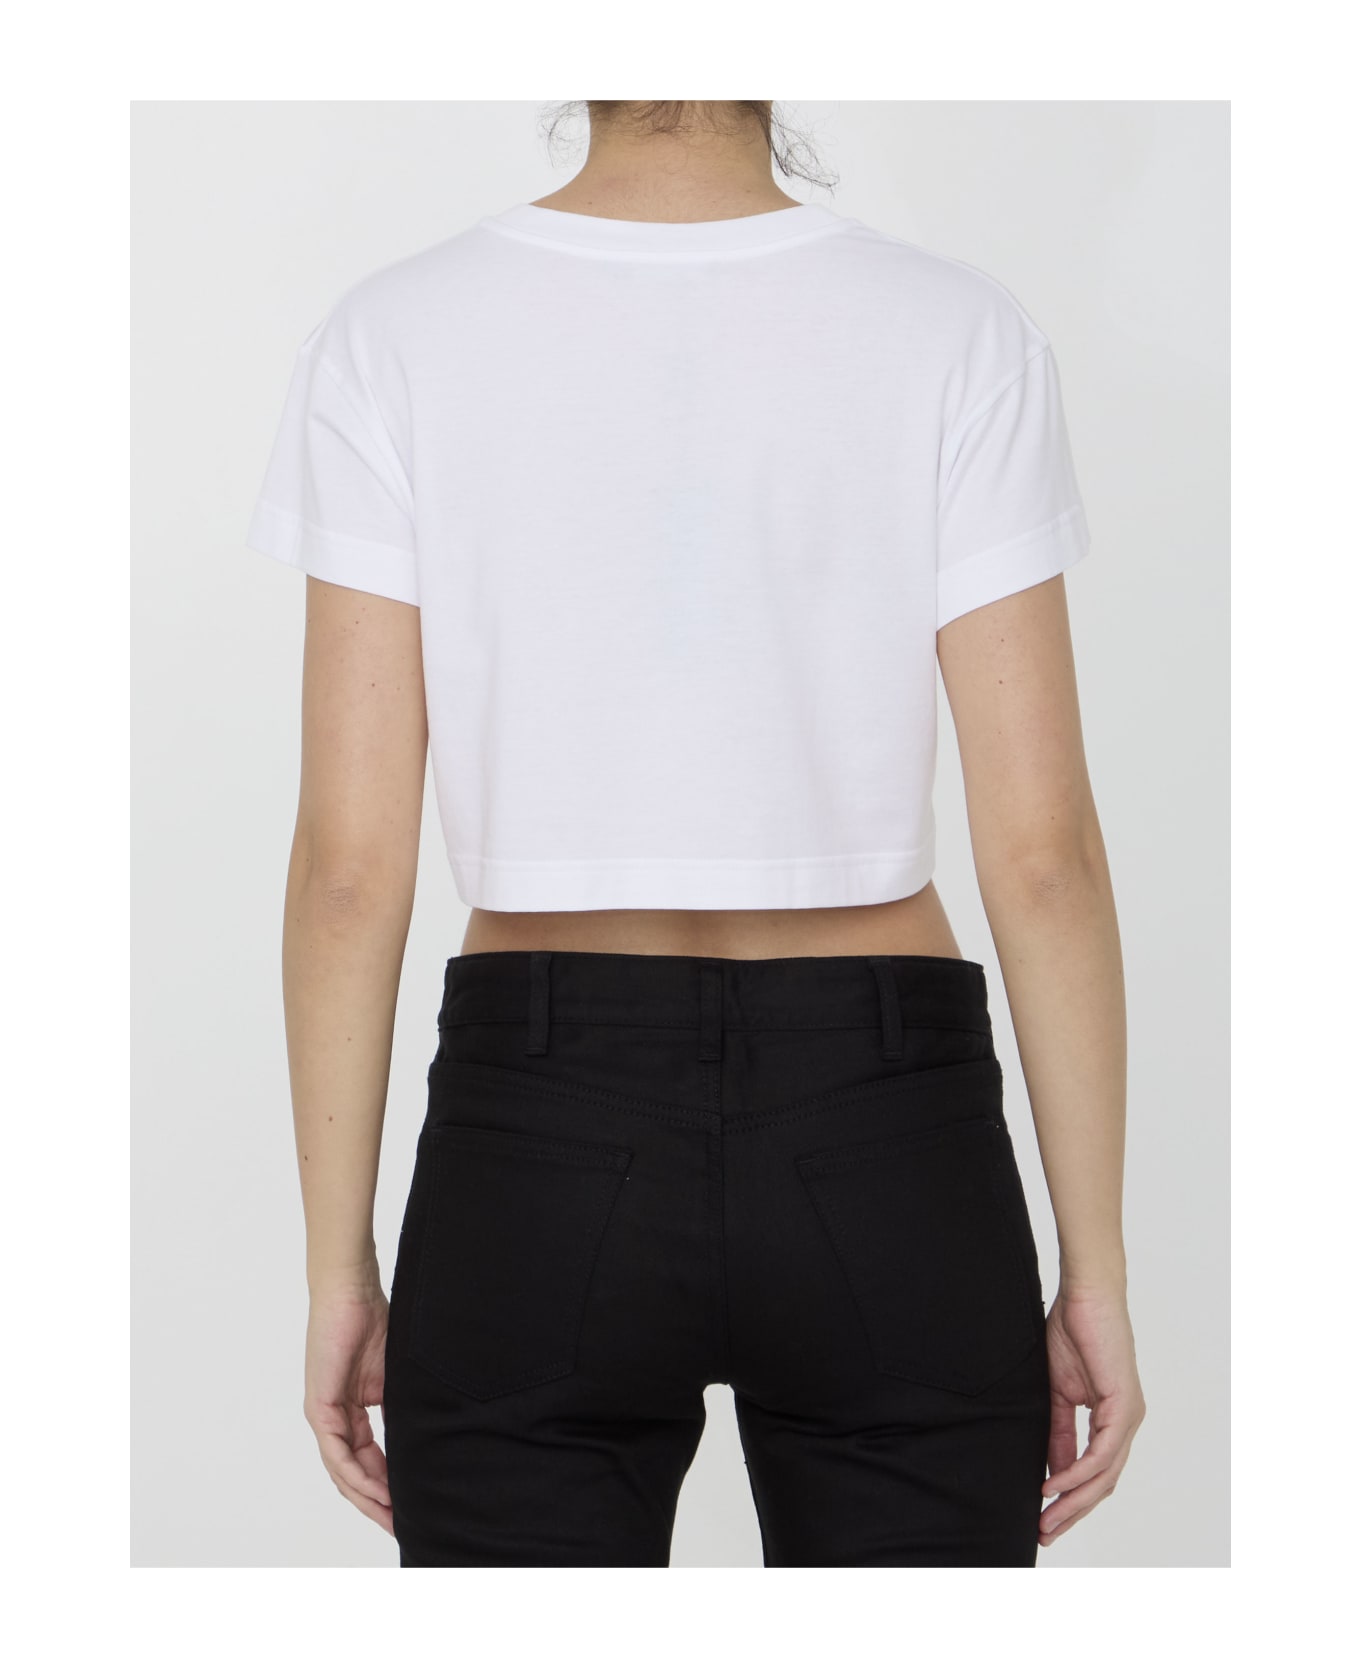 Dolce & Gabbana T-shirt With Floral Appliqué - WHITE Tシャツ